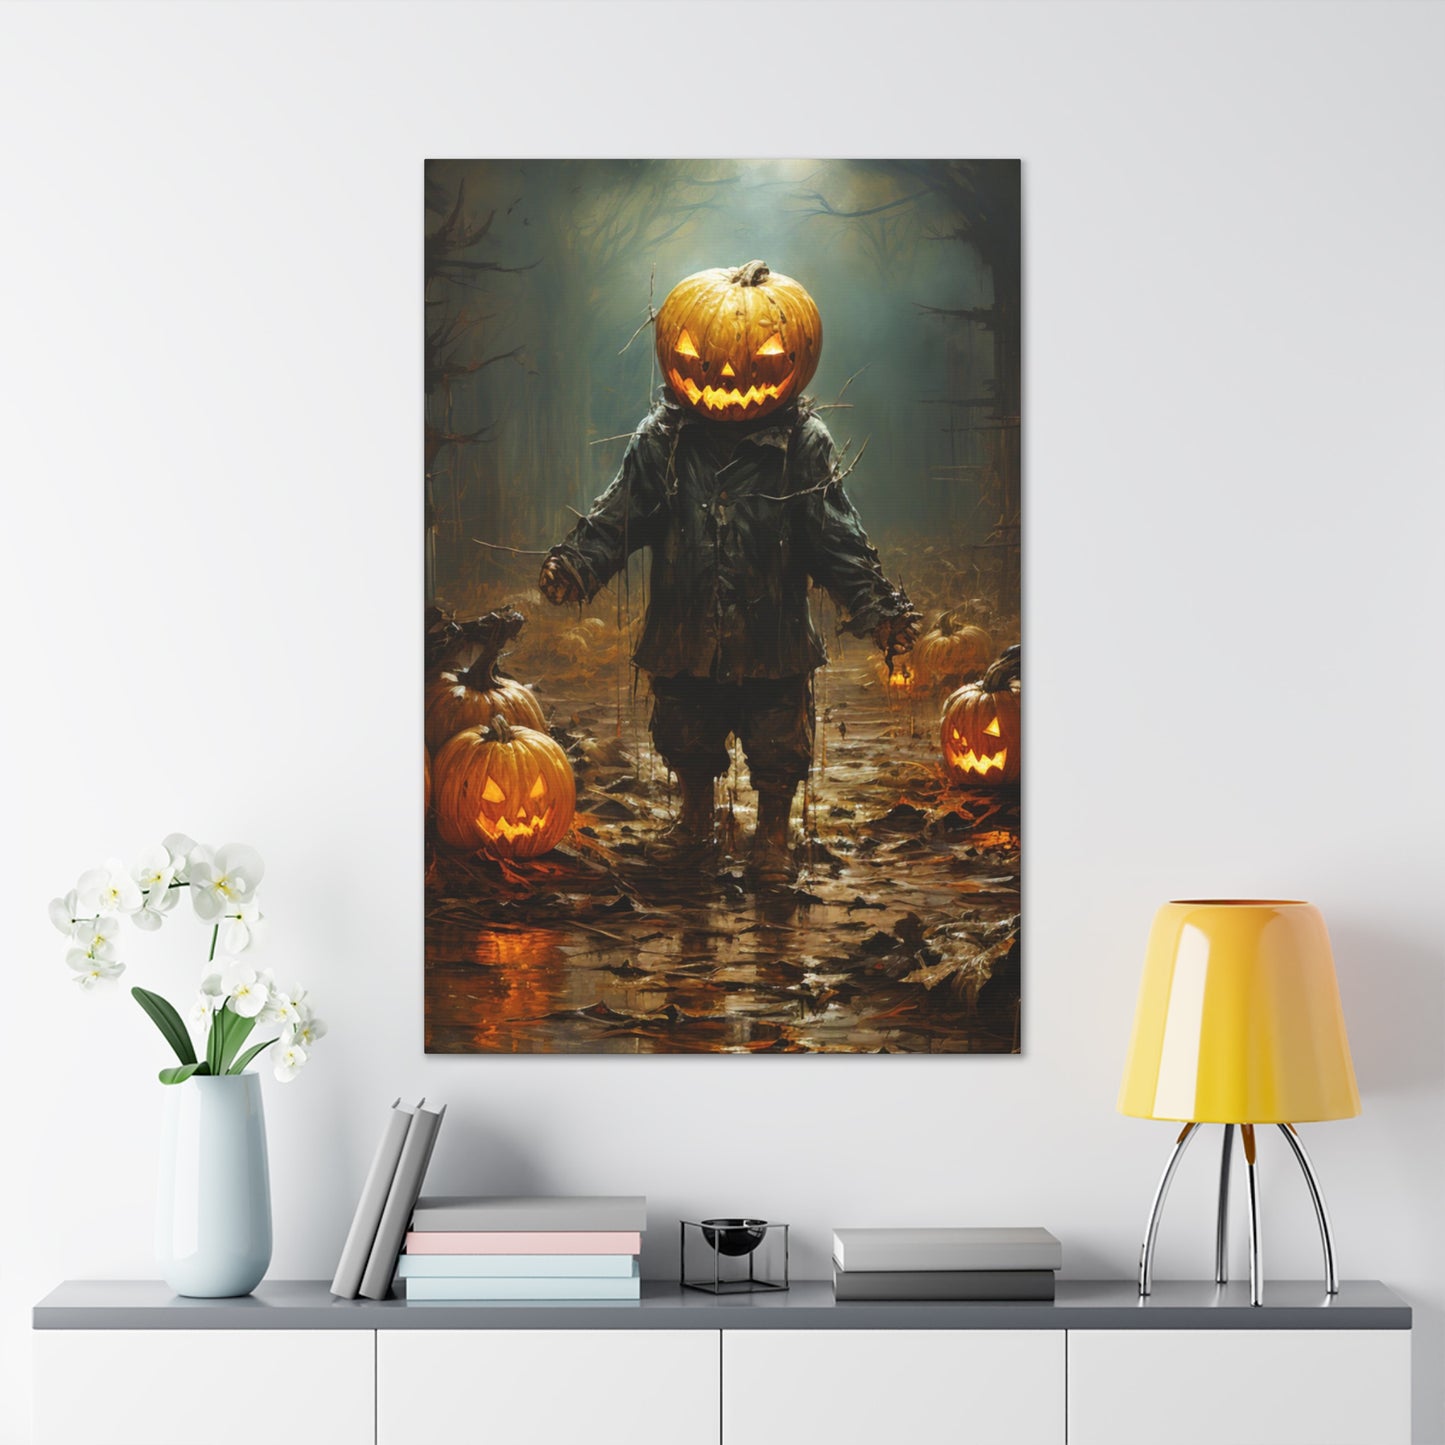 Halloween jack-o-lantern poster art